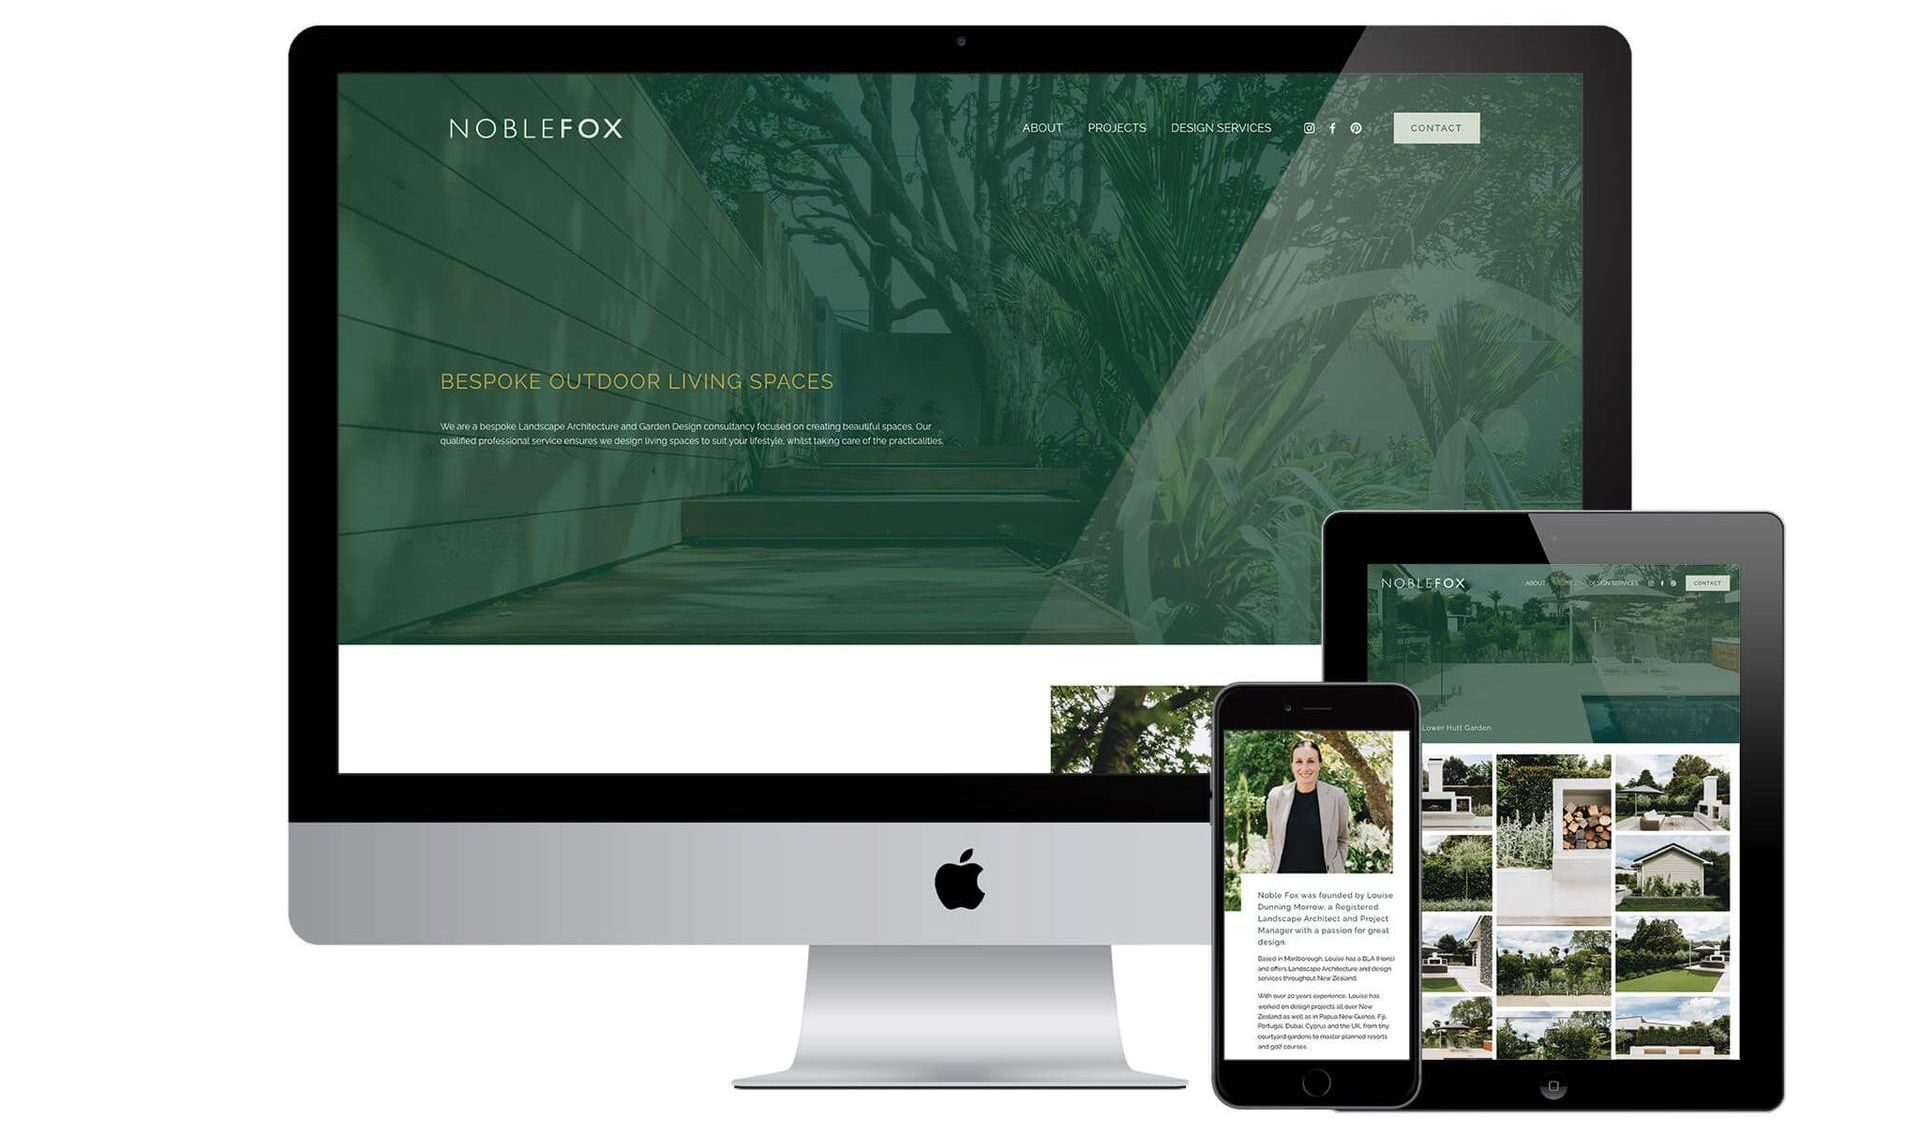 Noble Fox website designed by Vanilla Hayes creative graphic design  studio in Blenheim, Marlborough, New Zealand